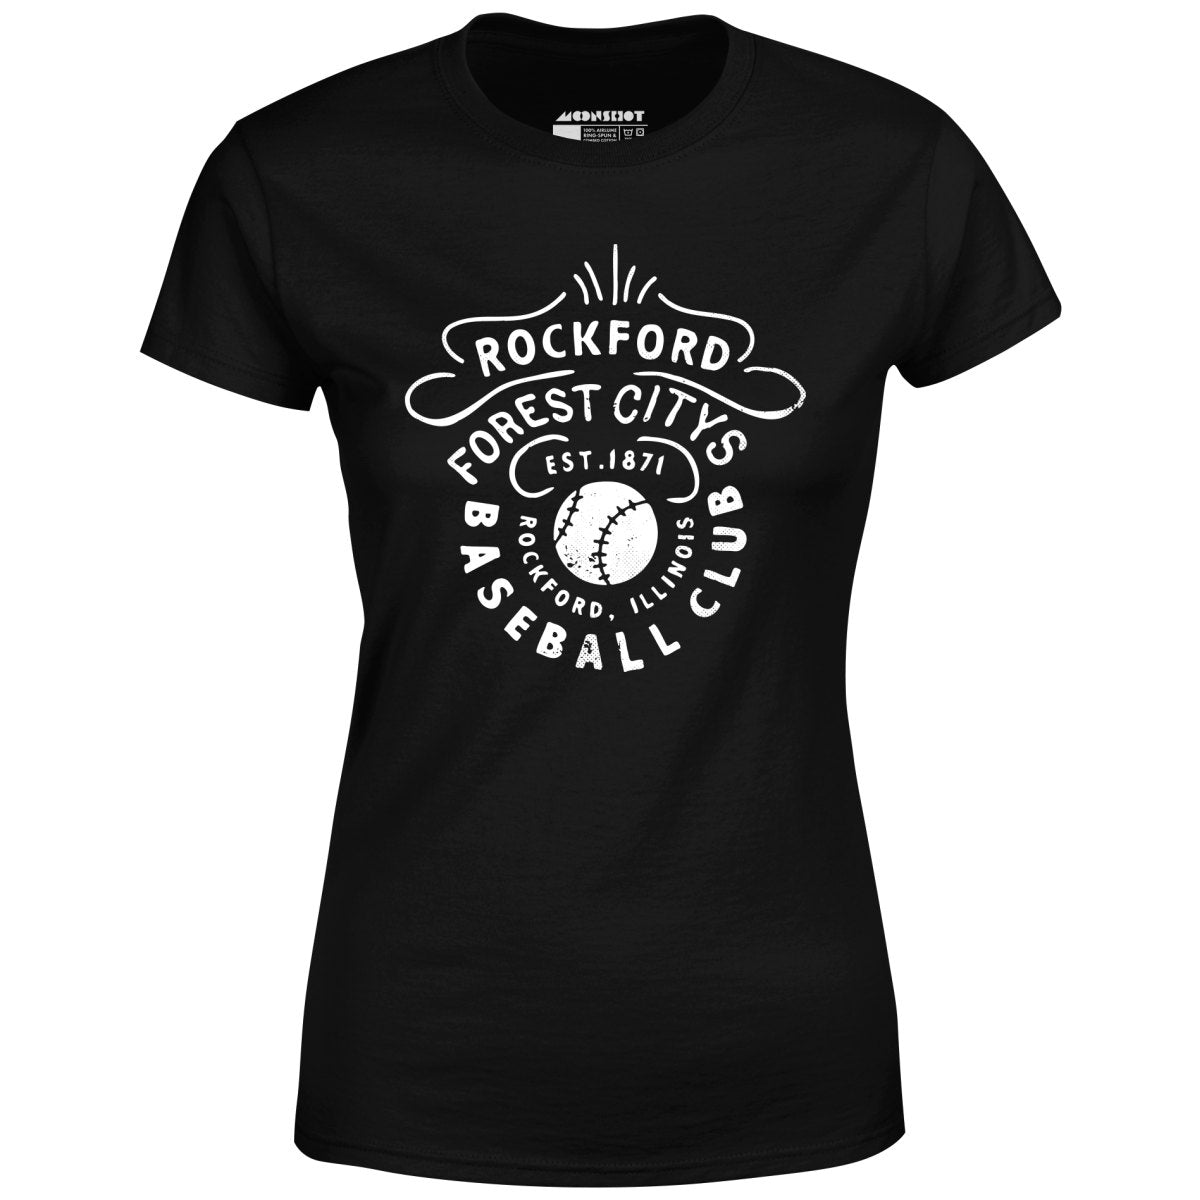 Rockford Forest Citys - Illinois - Vintage Defunct Baseball Teams - Women's T-Shirt